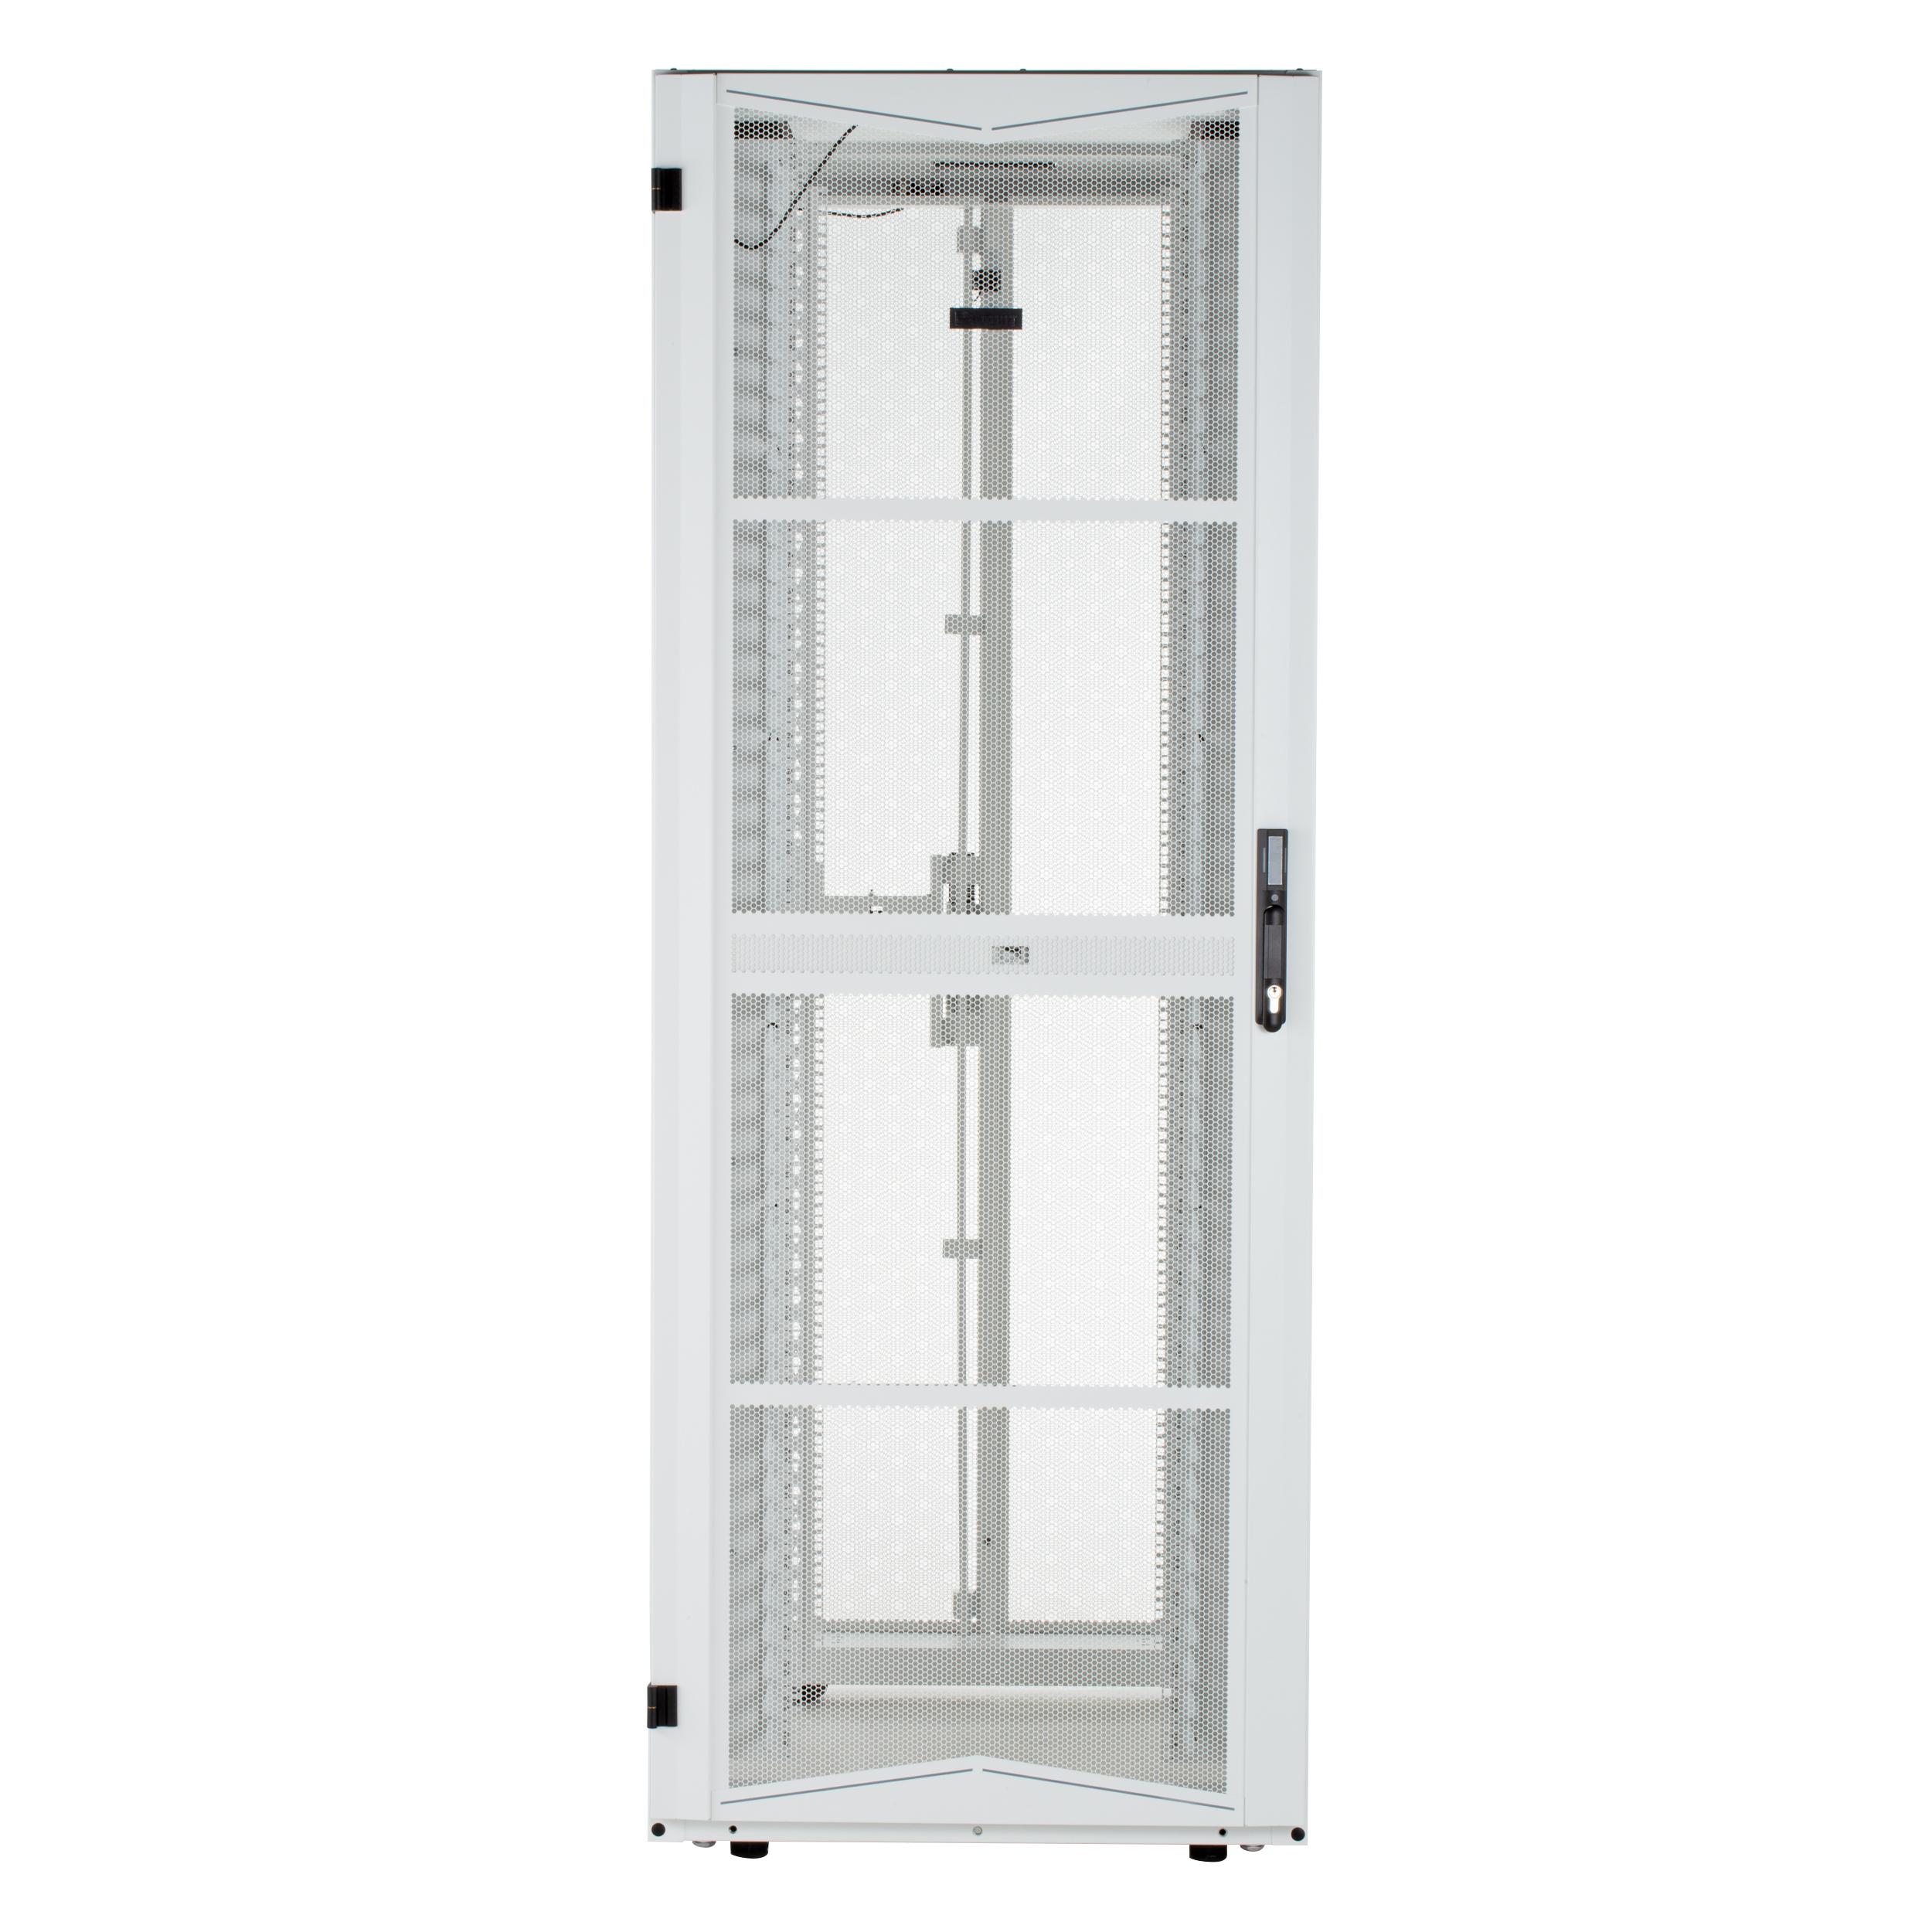 Panduit XG84212WS0003 FlexFusion Cabinet, 800mm x 42RU x 1070mm, White